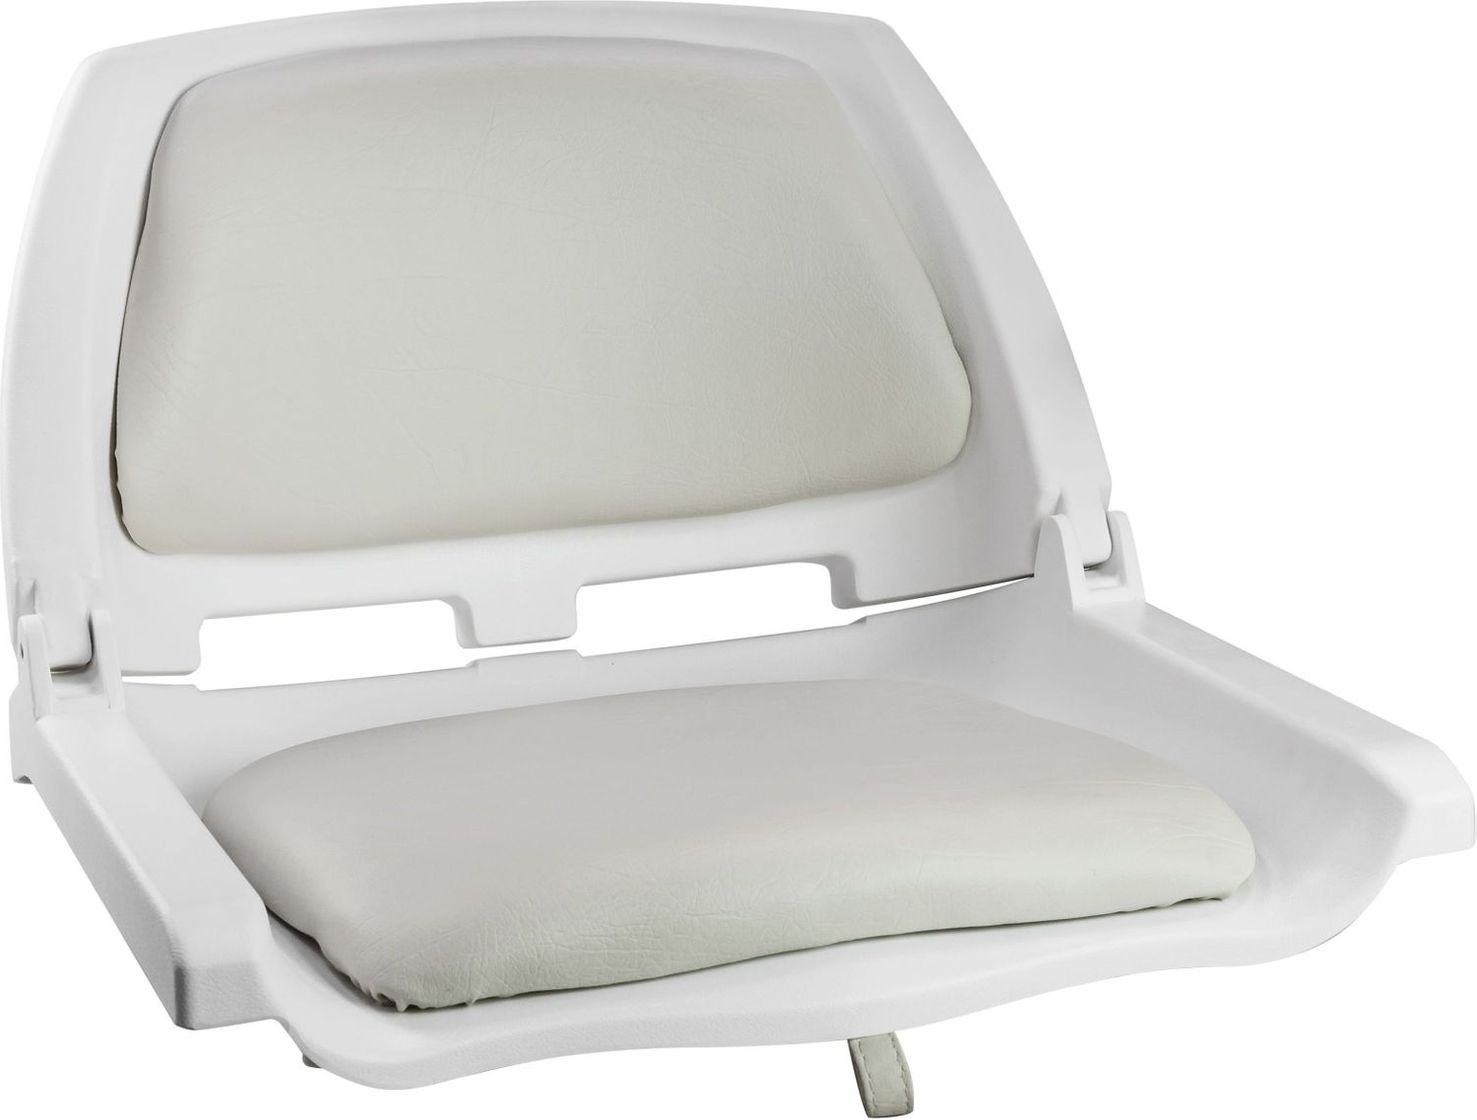 Кресло складное мягкое TRAVELER, цвет белый/серый (упаковка из 2 шт.) 1061104C_pkg_2 морская акустика 6 x9 boss mr692w упаковка из 2 шт mr692w pkg 2